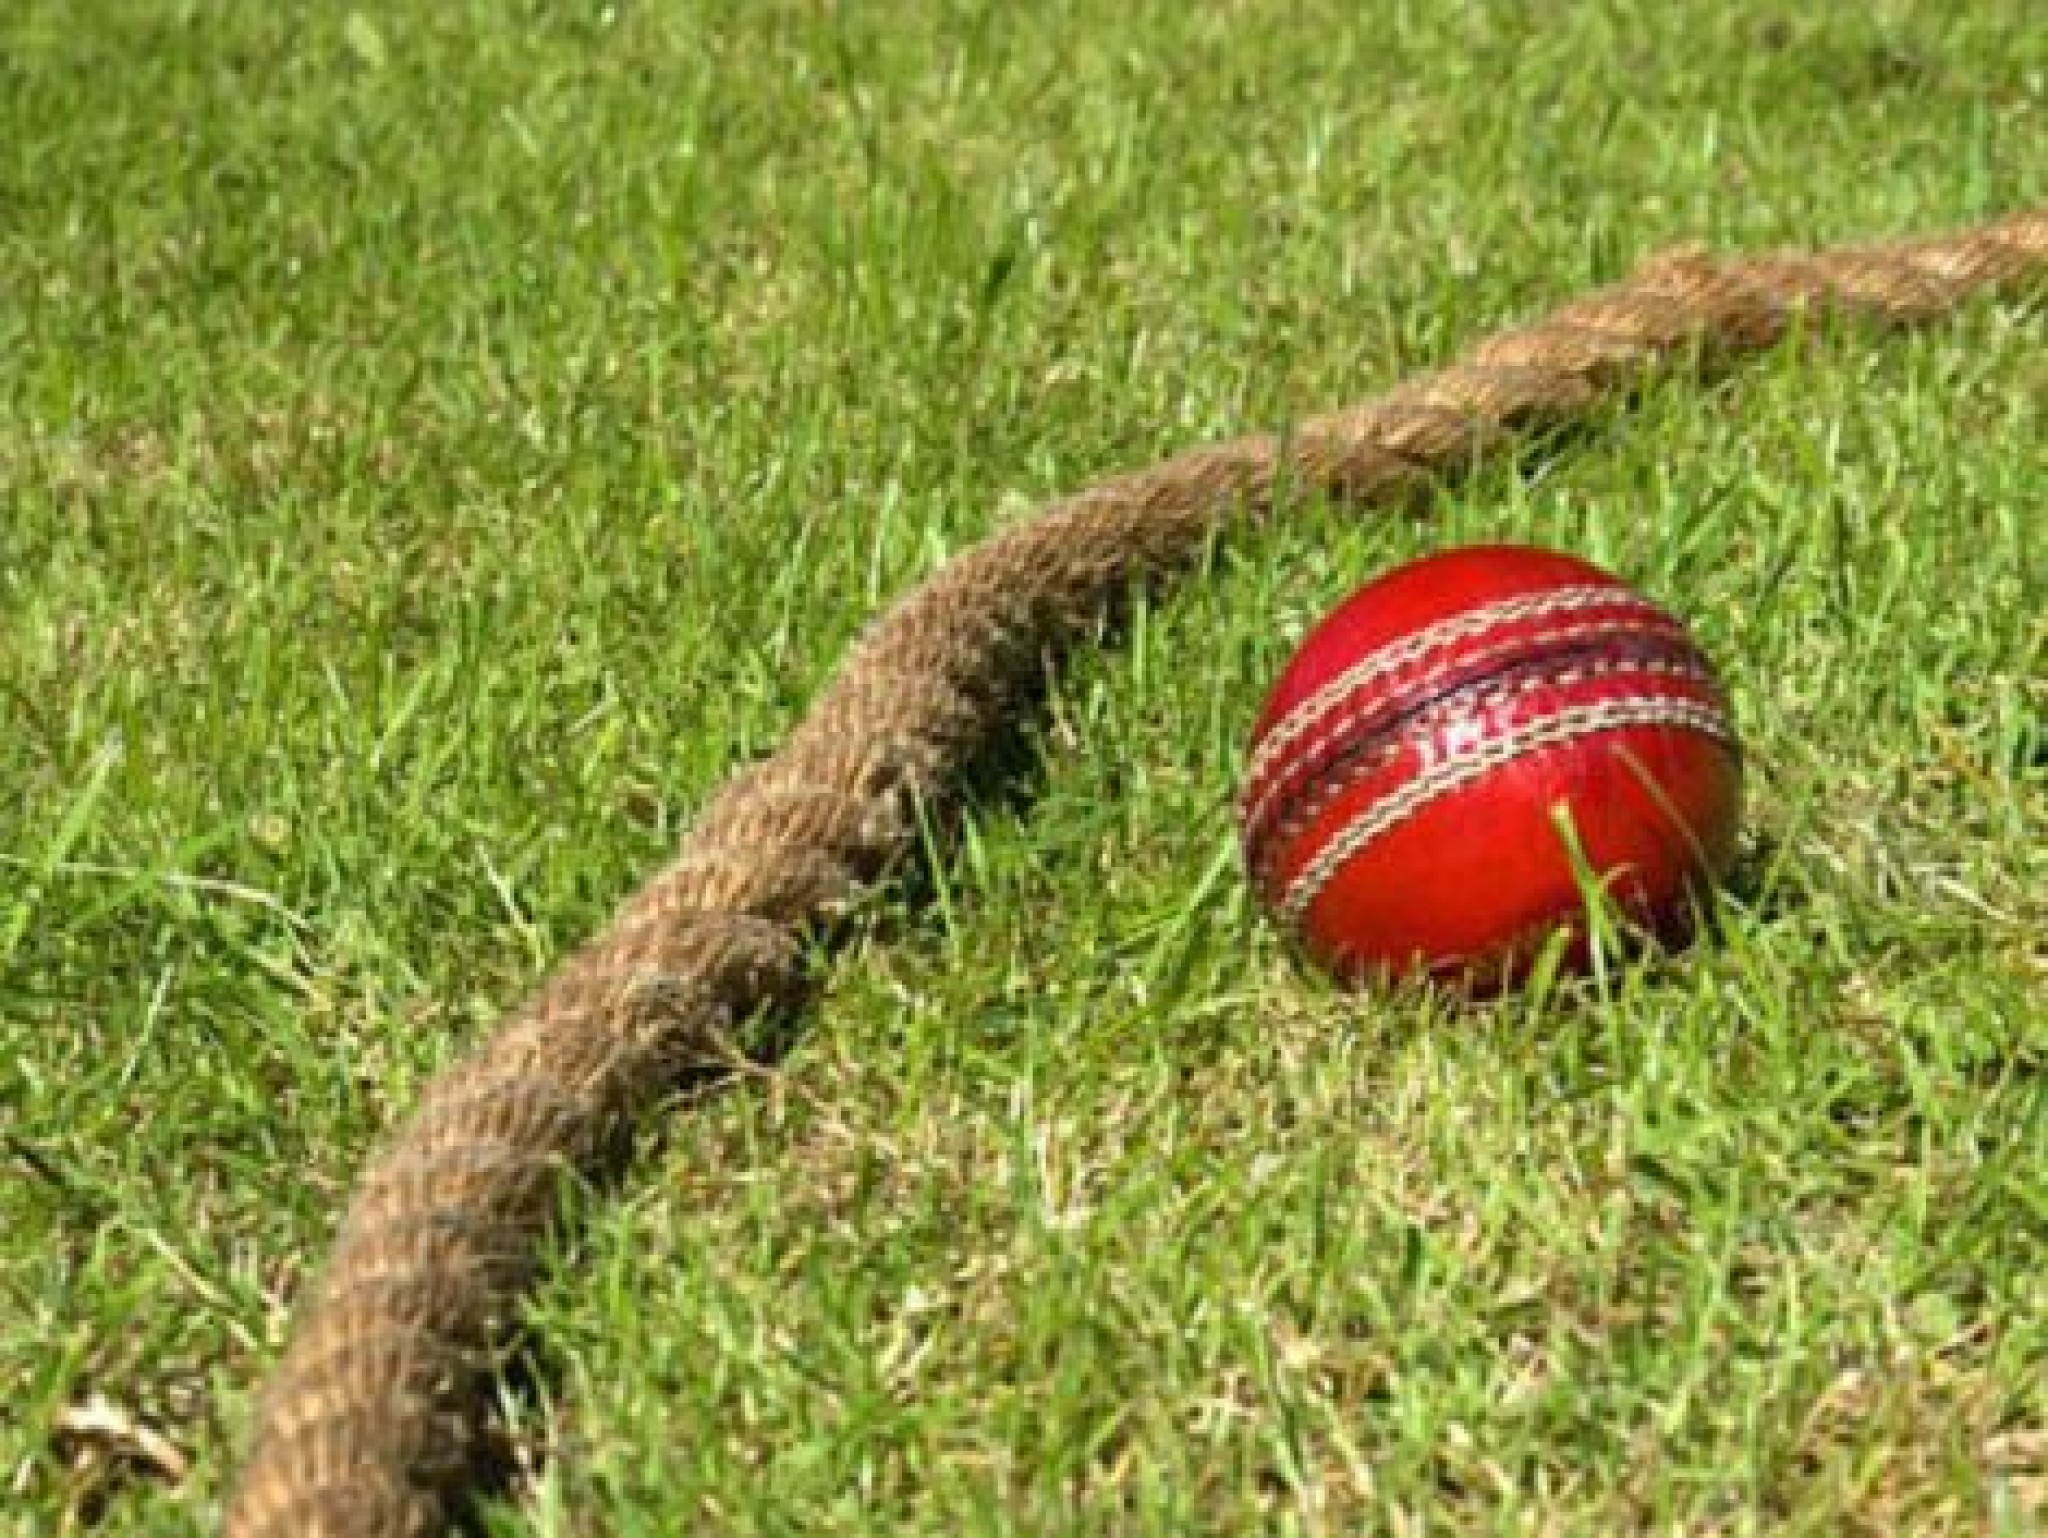 HBCC-cricket-ball-470x353.jpg